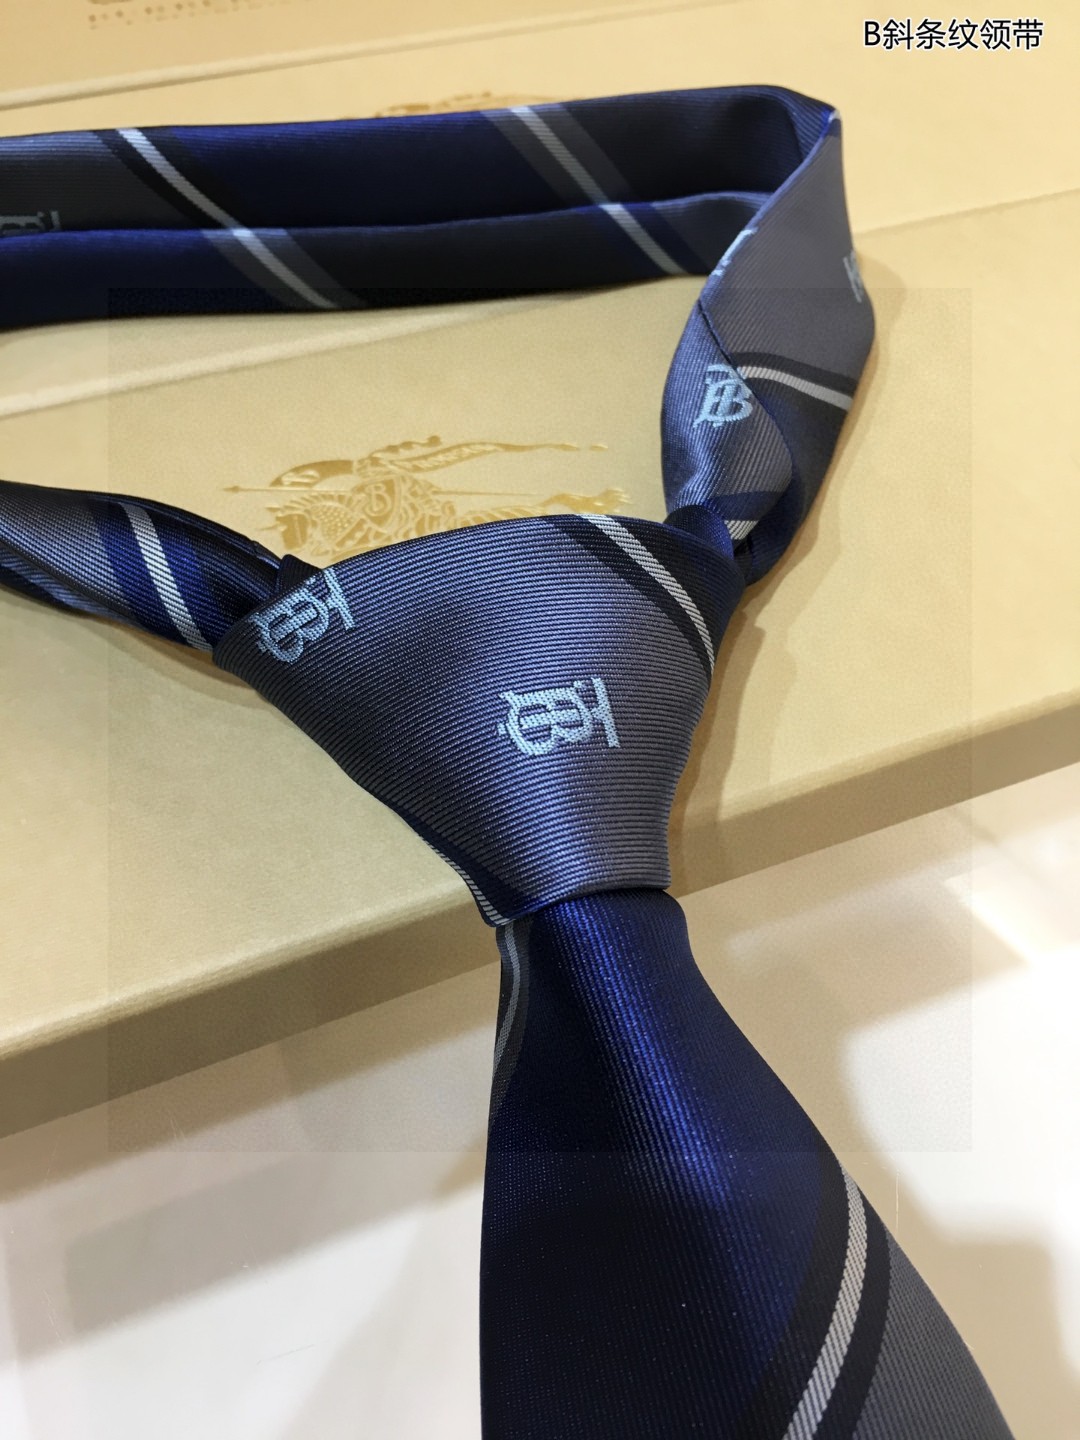 B斜条纹领带这款绝了专柜即将售磬实物真的很美巴宝莉男士博柏利爆款TB标志领带稀有展现精湛手工与时尚优雅的